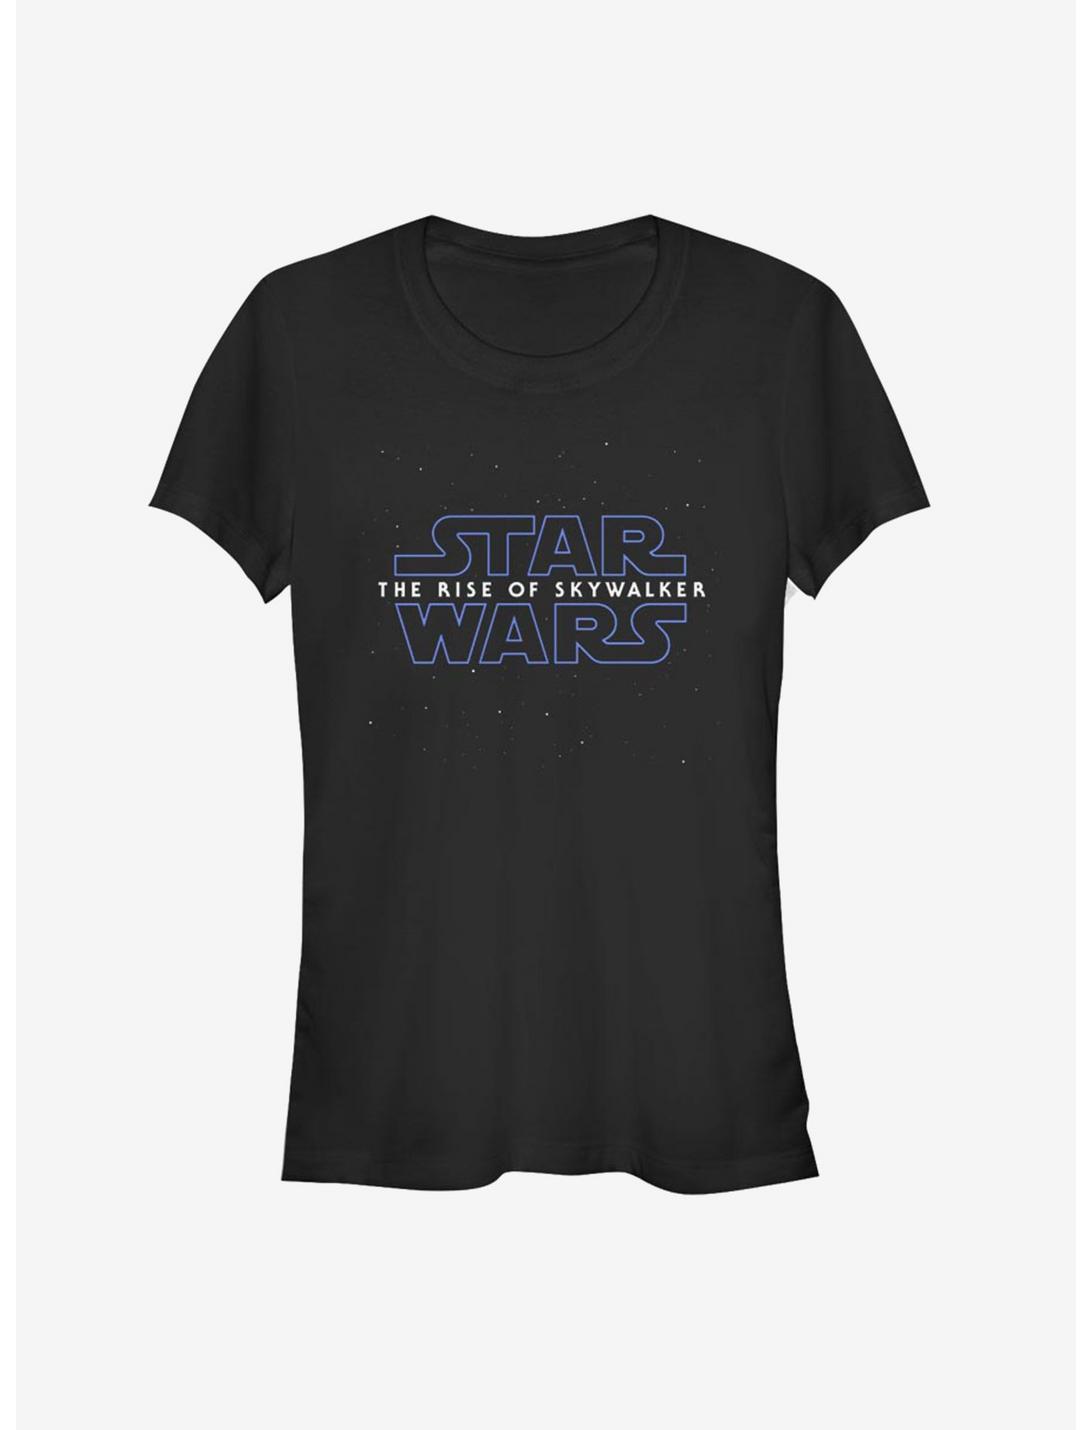 Star Wars: The Rise of Skywalker Stars Girls T-Shirt, BLACK, hi-res